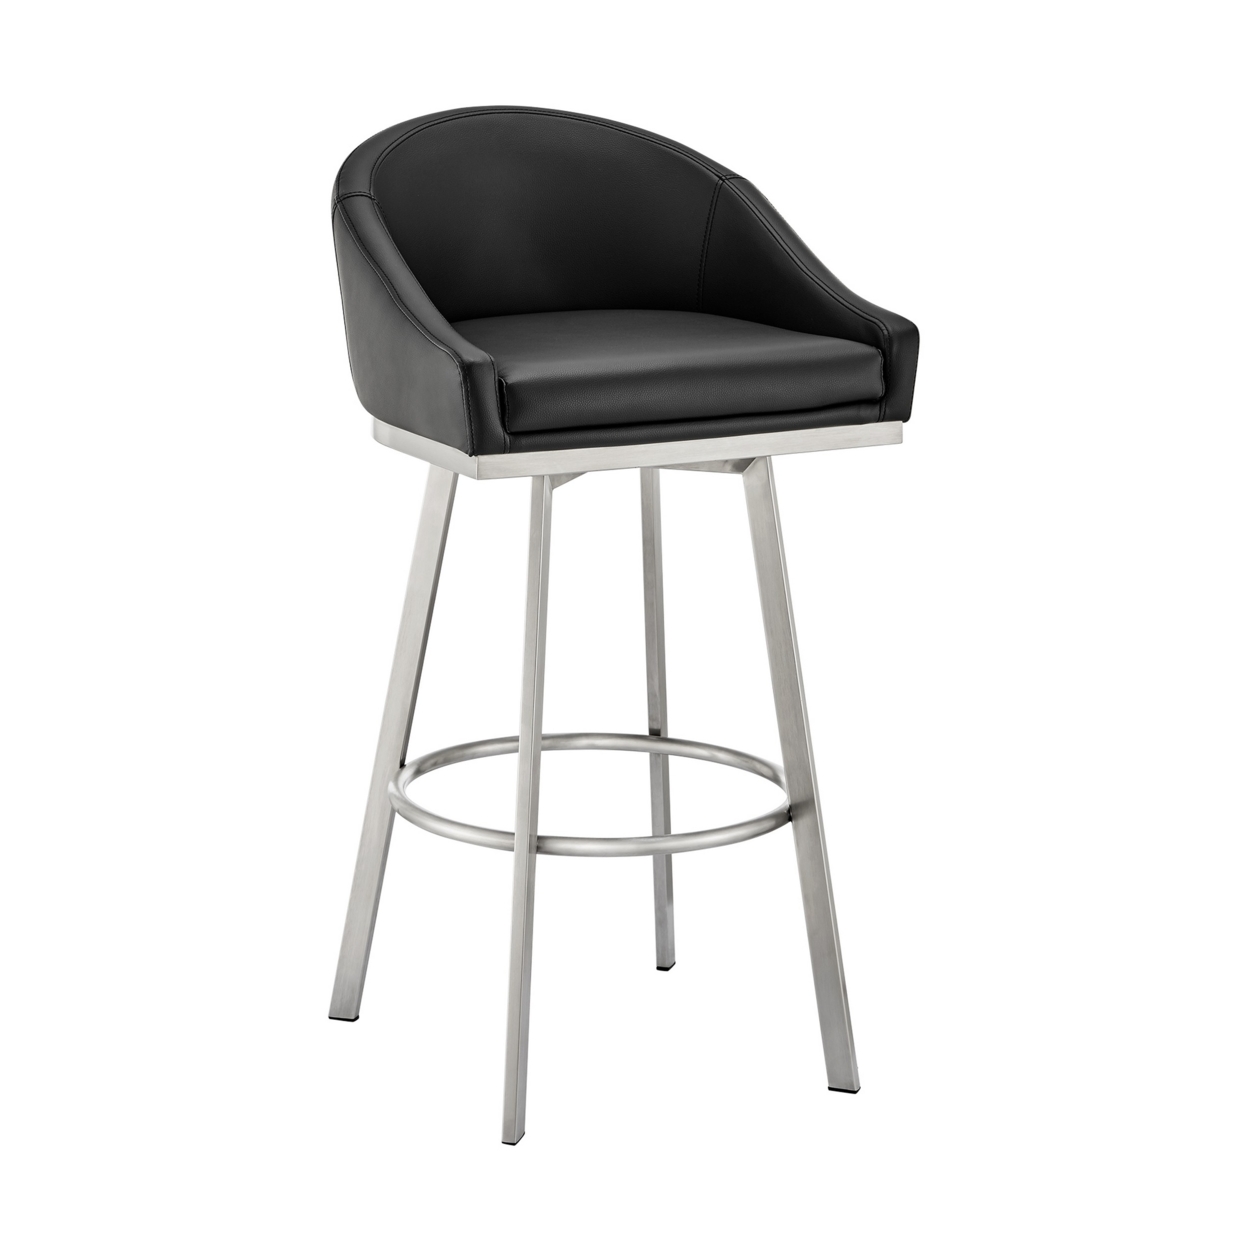 Sheryl 26 Inch Swivel Counter Stool Chair, Low Back, Black Faux Leather- Saltoro Sherpi